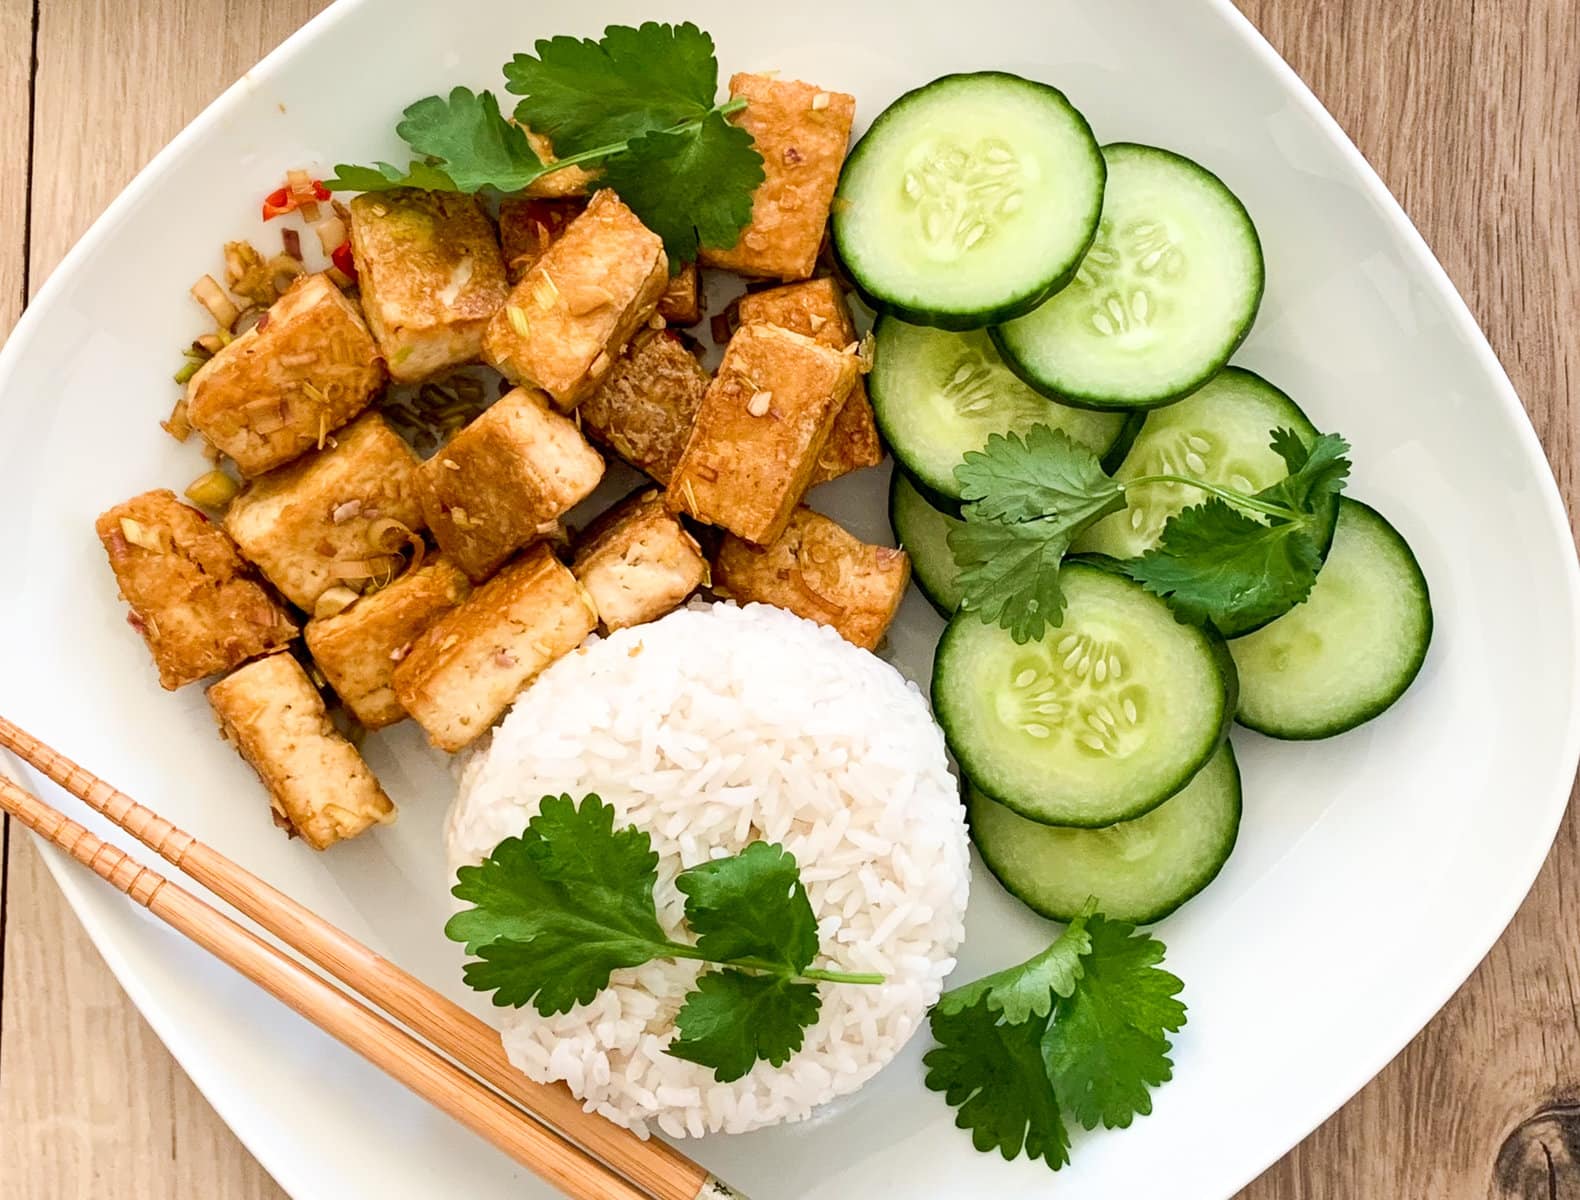 Serve the Lemongrass Tofu with Rice